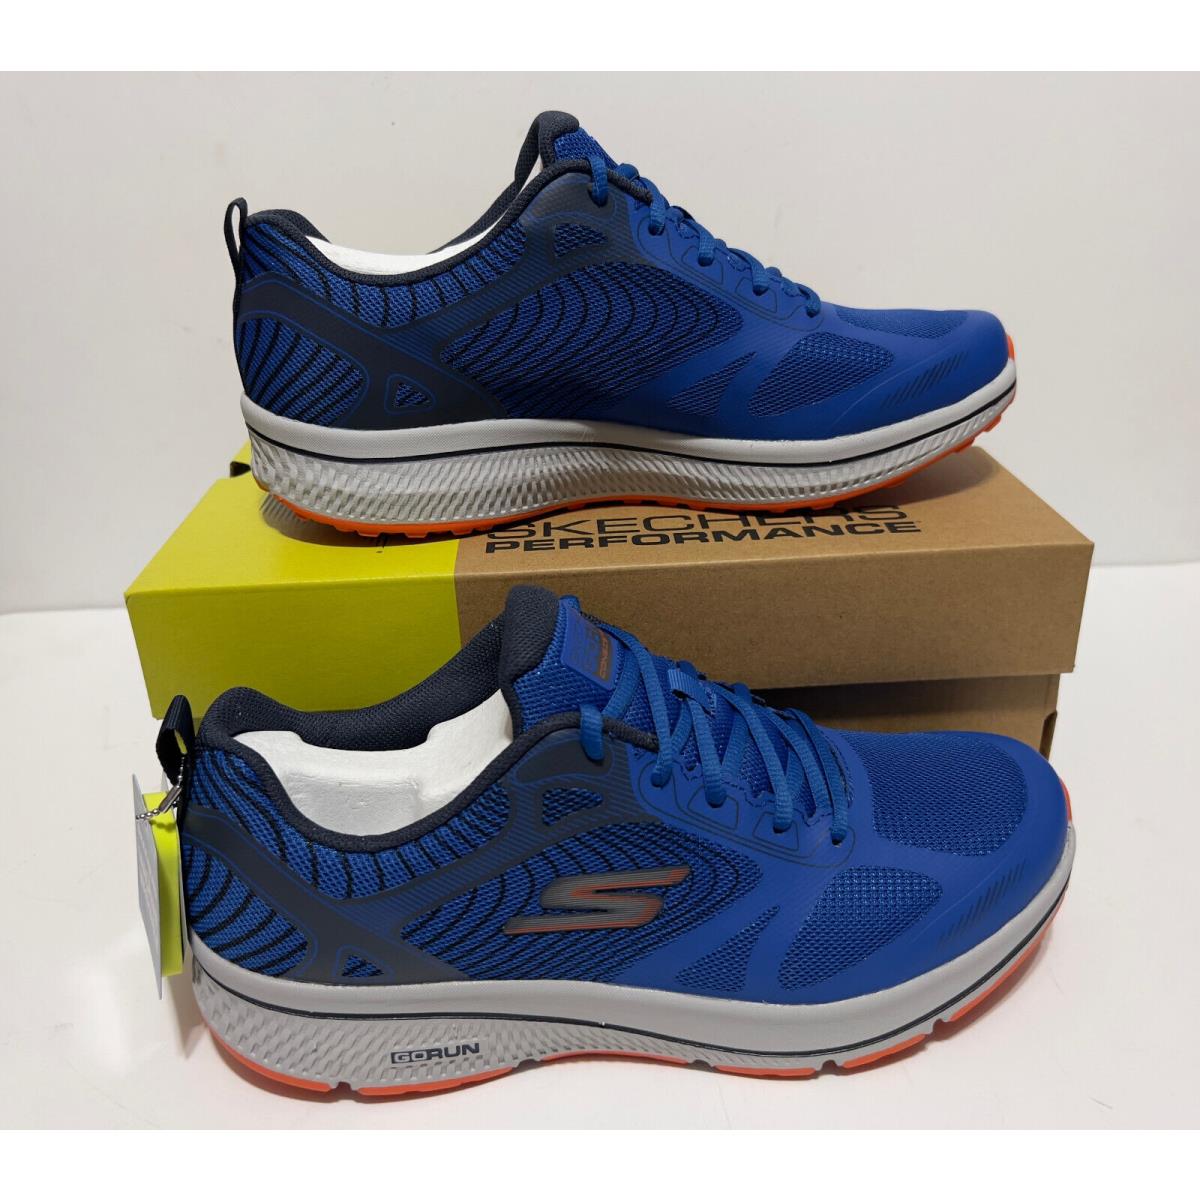 Skechers shoes  - BLUE/ORANGE 5